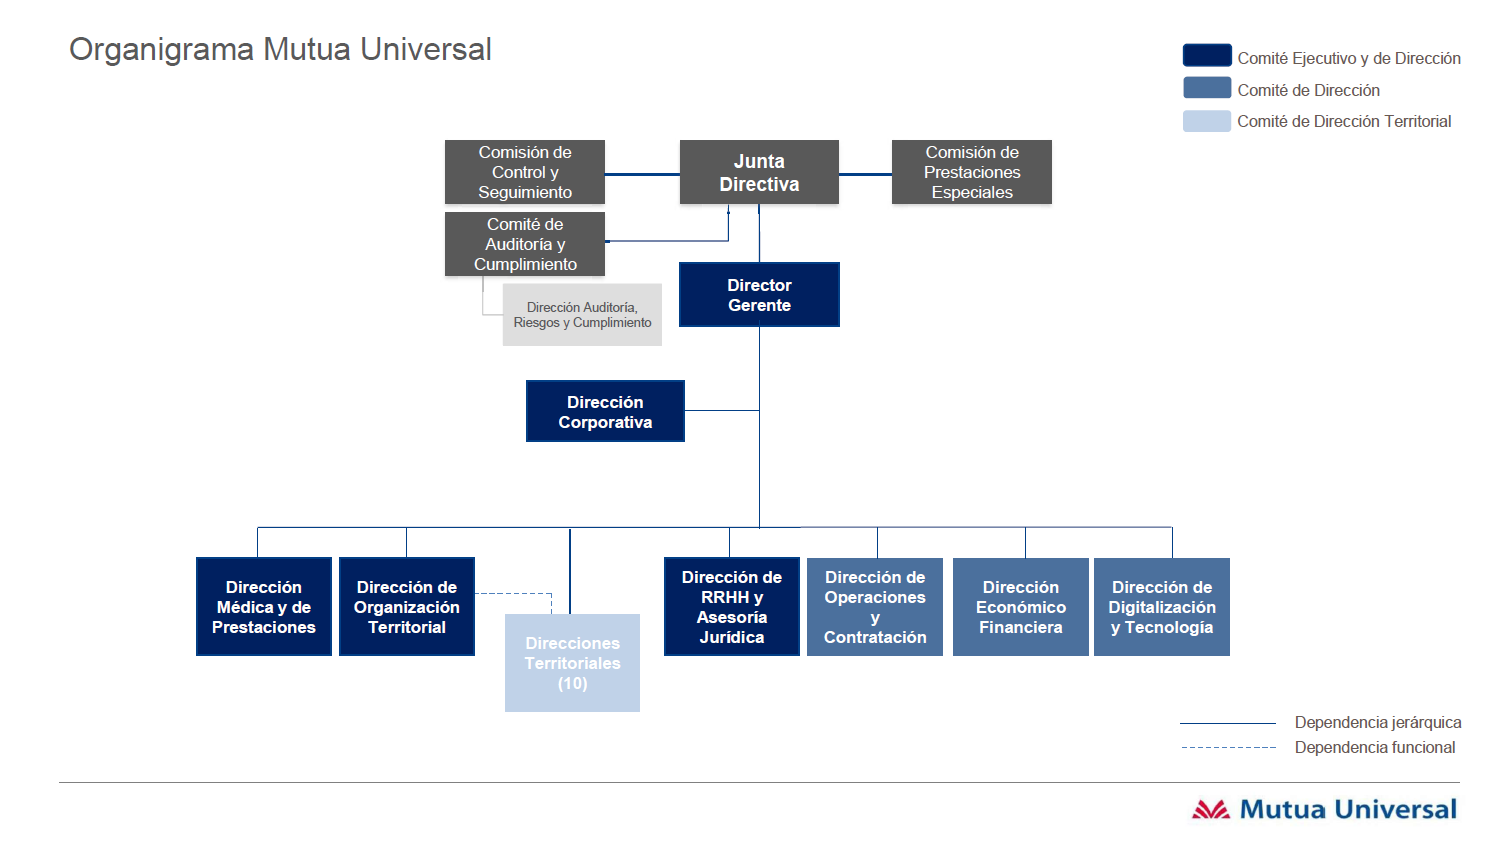 Organisational model of Mutua Universal